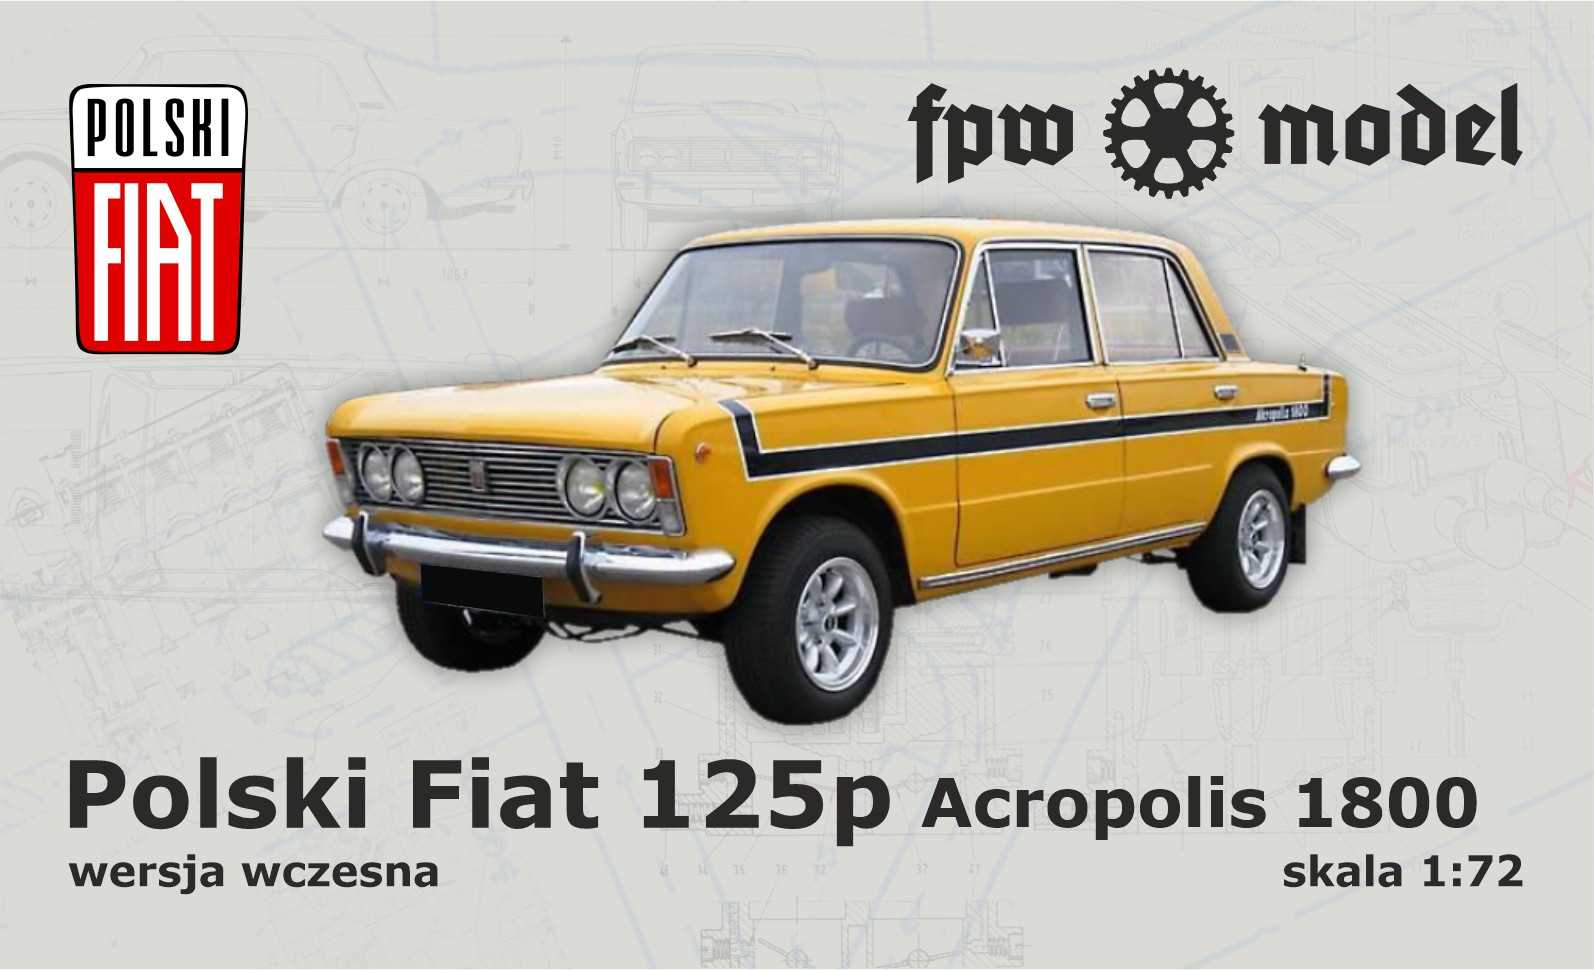 Polski Fiat 125p - early "Acropolis 1800"